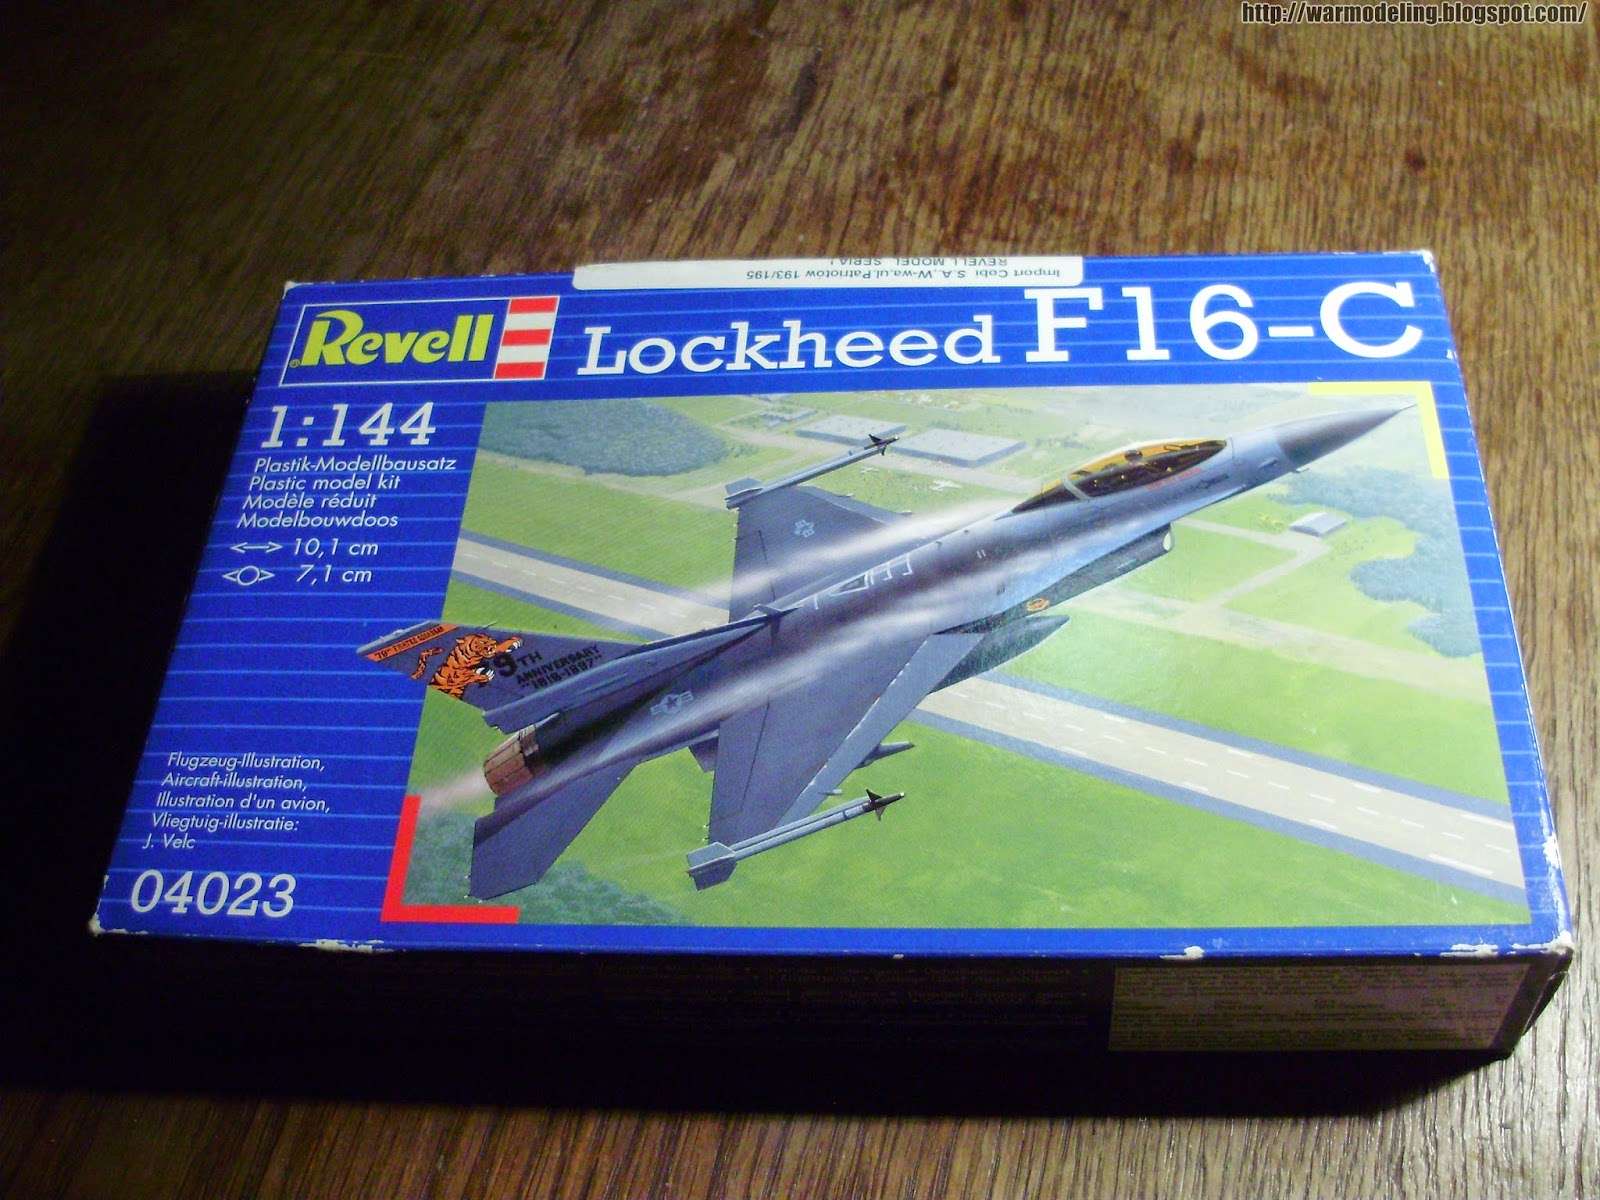 Jak zrobiony jest ten model #22: Lockheed F-16-C, Revell skala 1:144